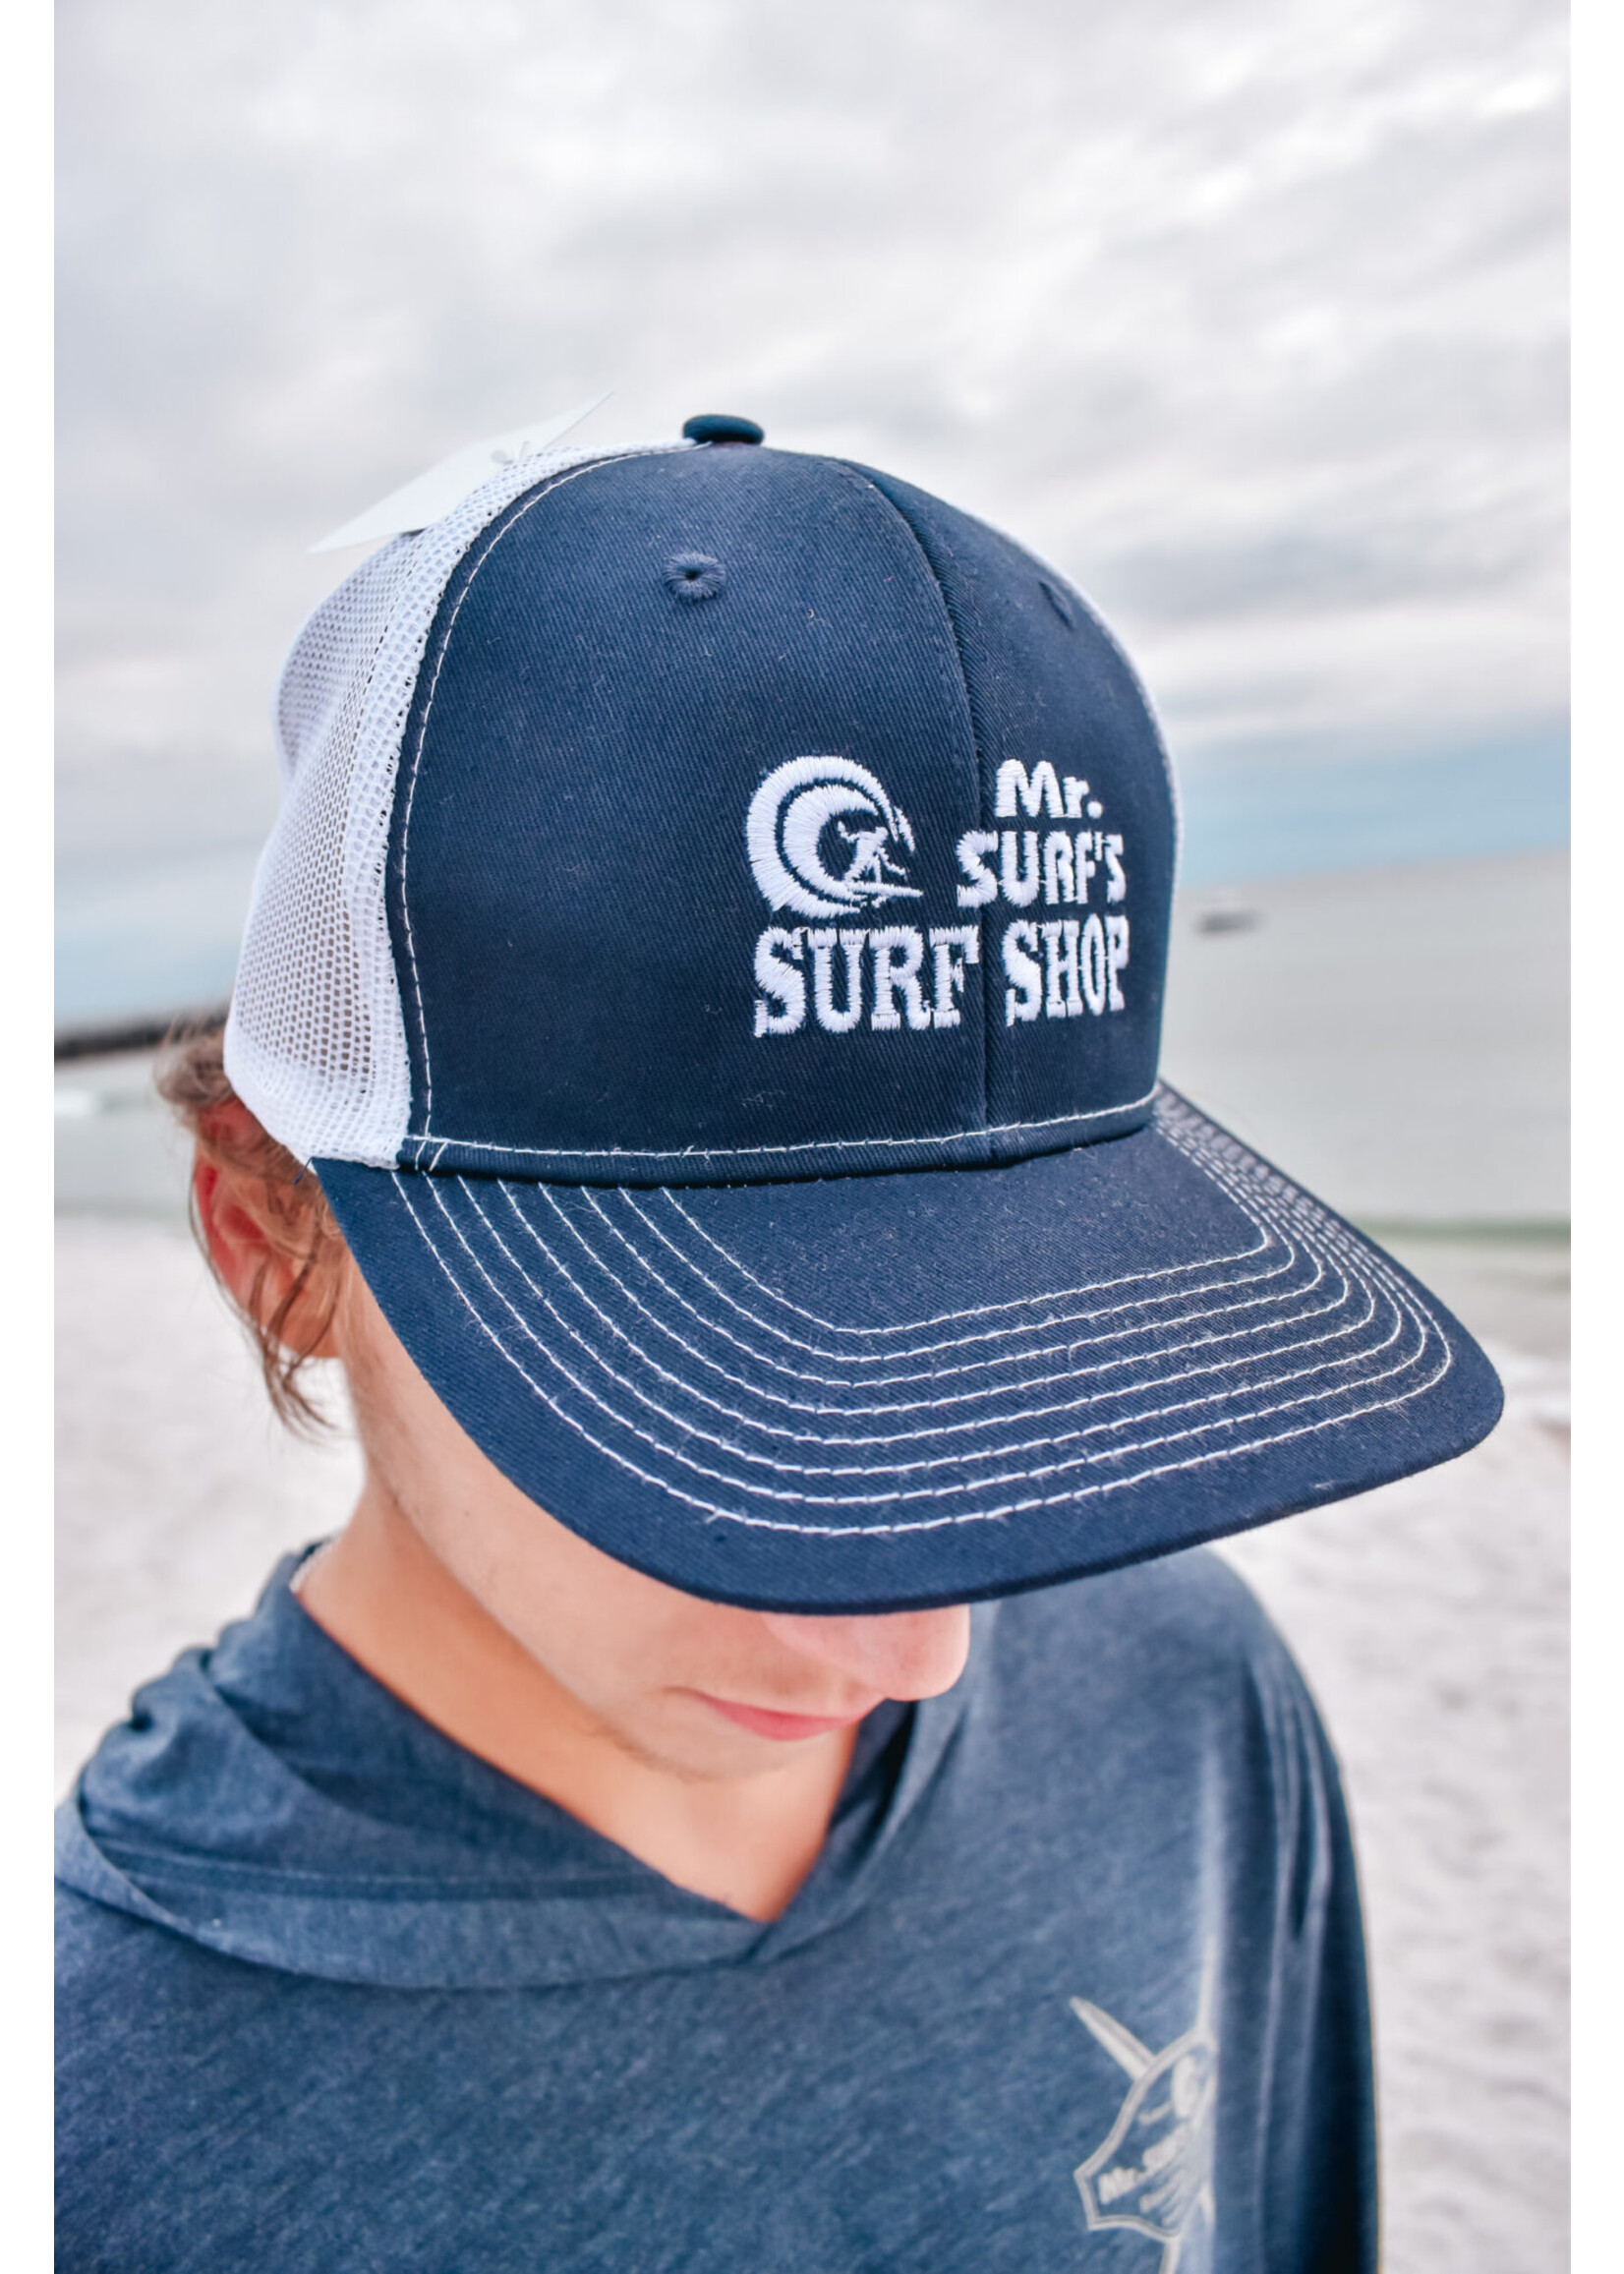 Mr Surfs Mr Surfs Snapback Trucker Hat